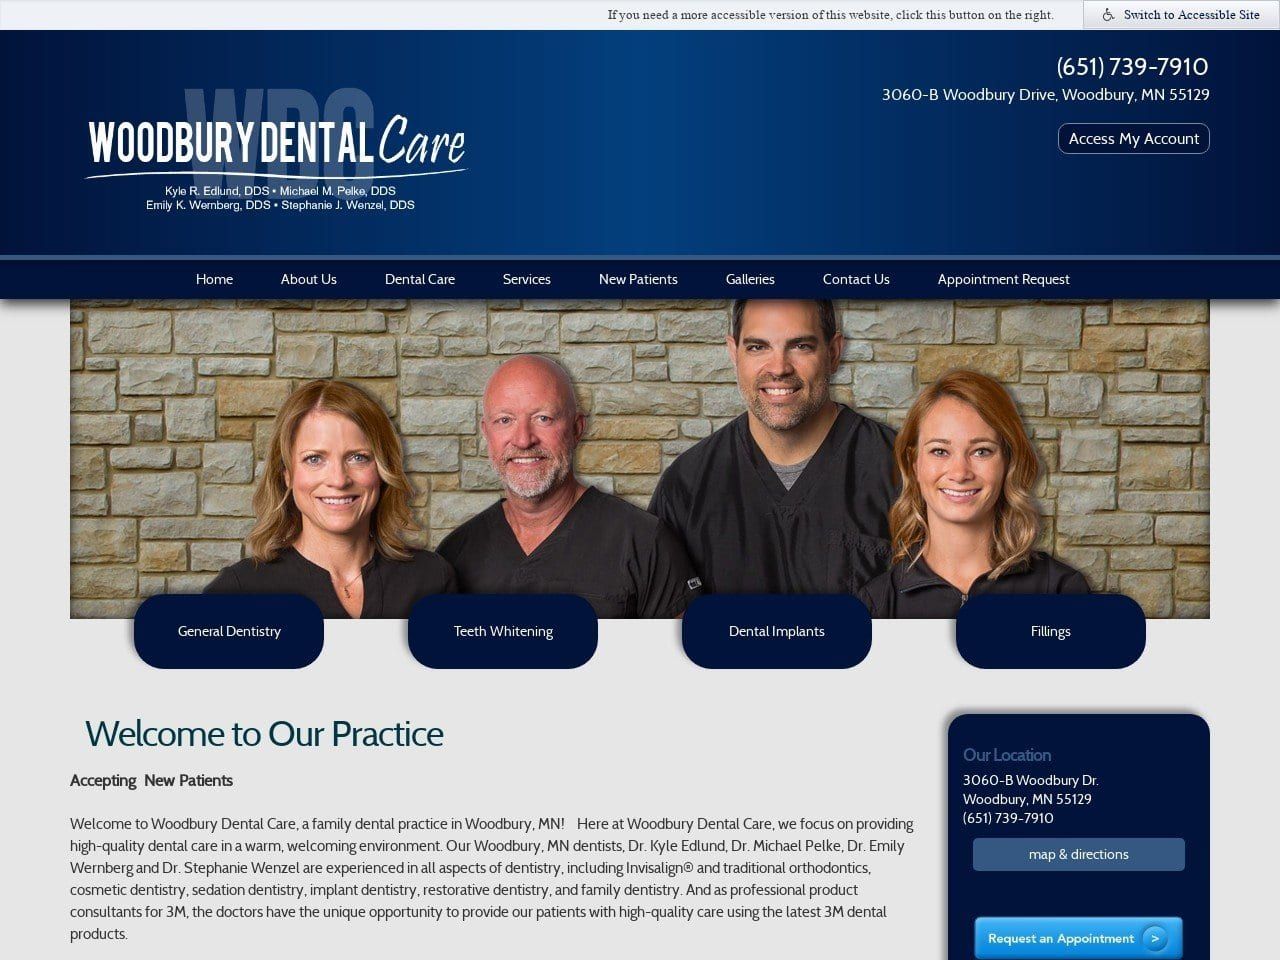 Woodbury Dental Care Website Screenshot from woodburydentalcare.com